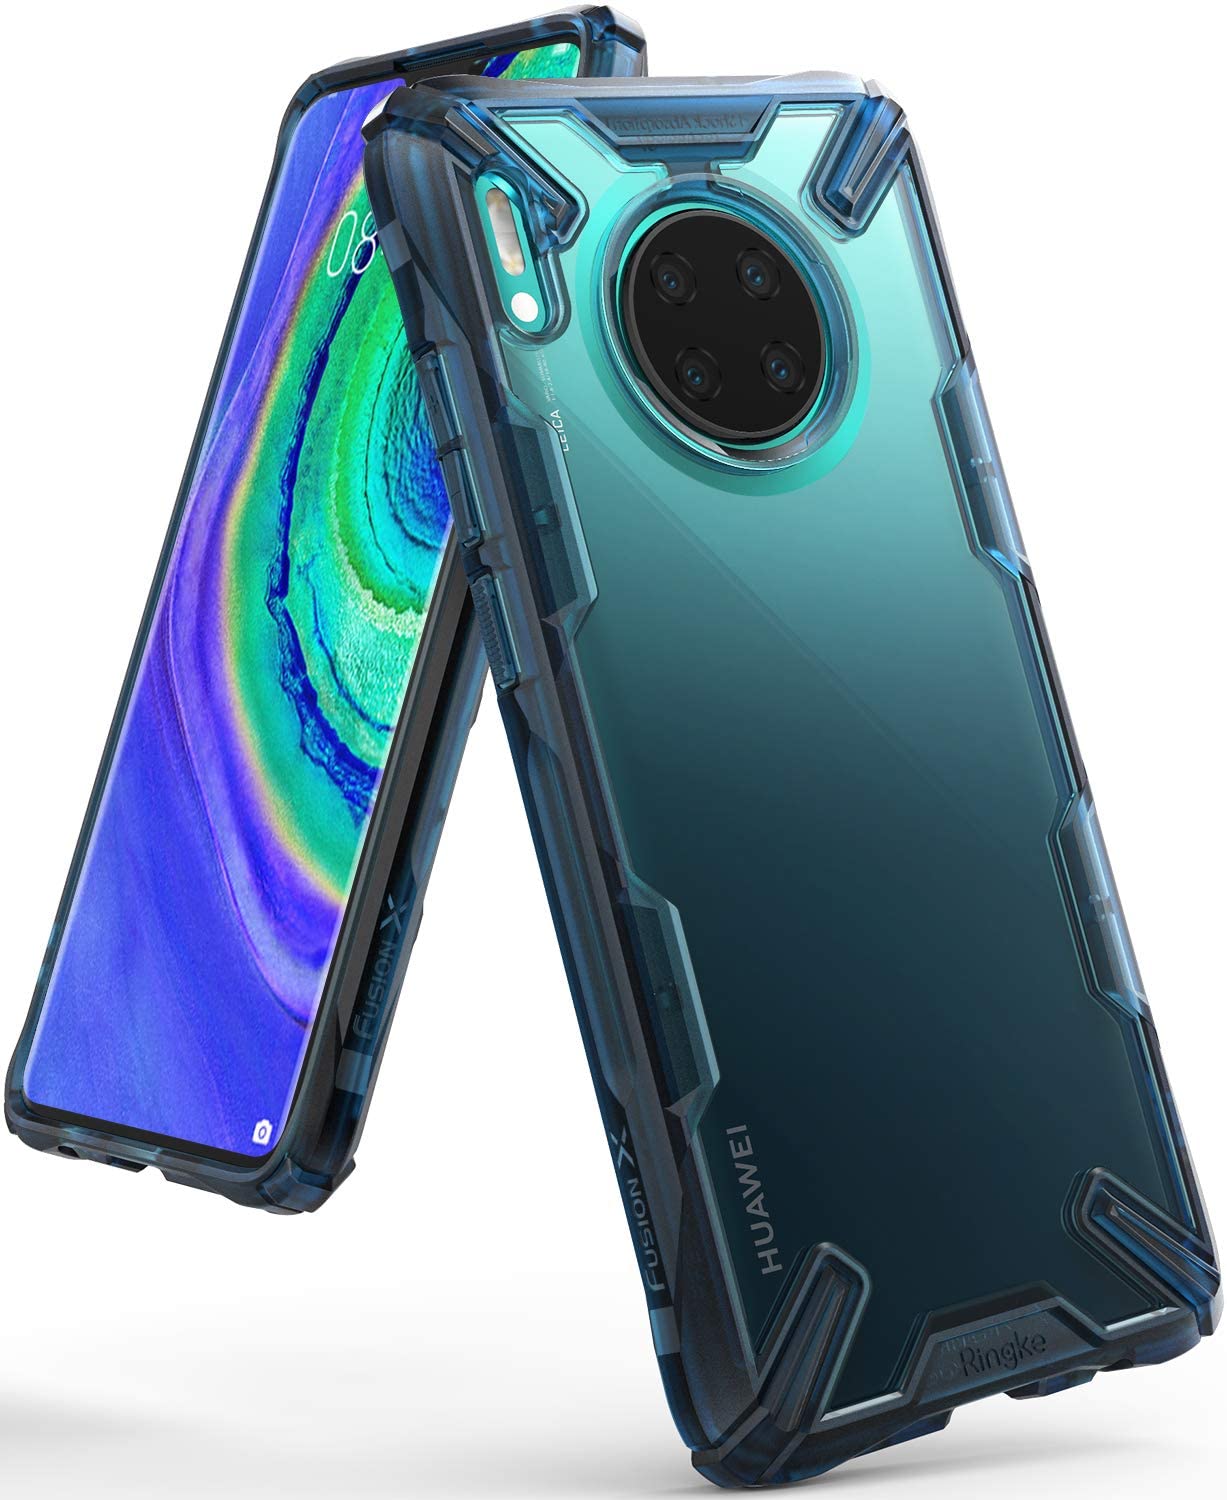 Ringke Fusion X Huawei Mate 30 Case